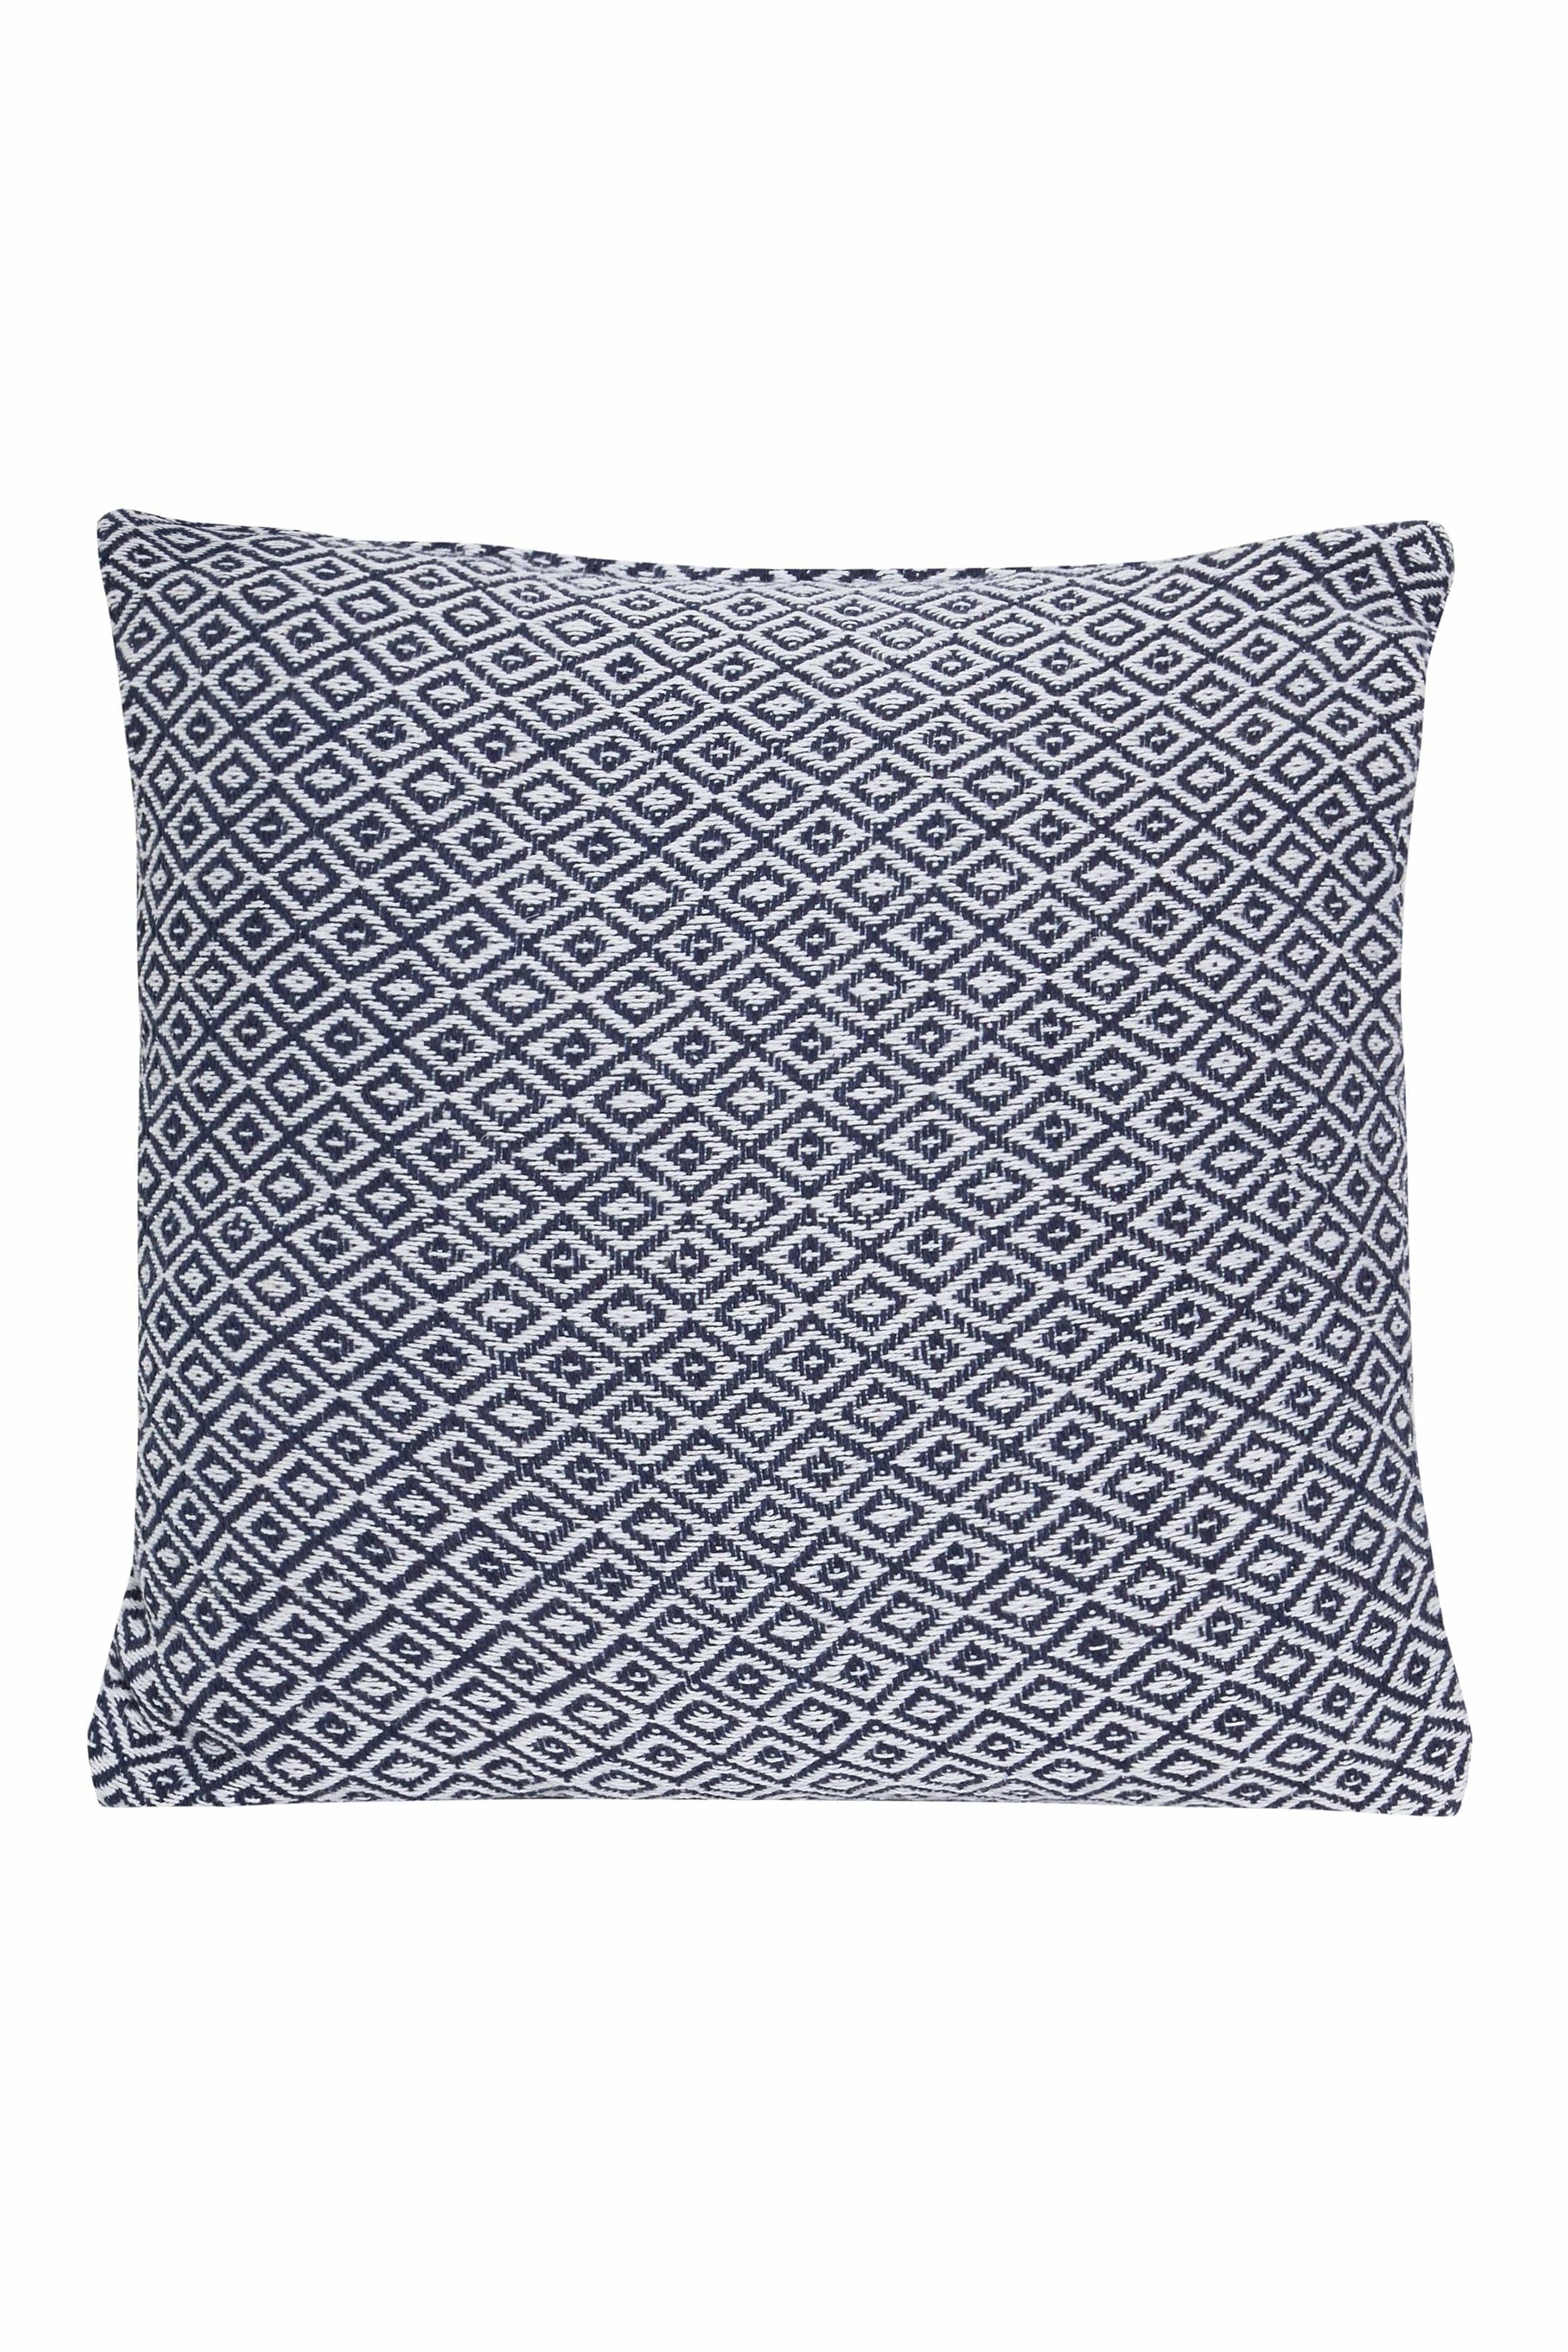 Regal Pure Cotton Cushion Cover NAVY / 43 x 43 cm OLIVIA ROCCO Cushions